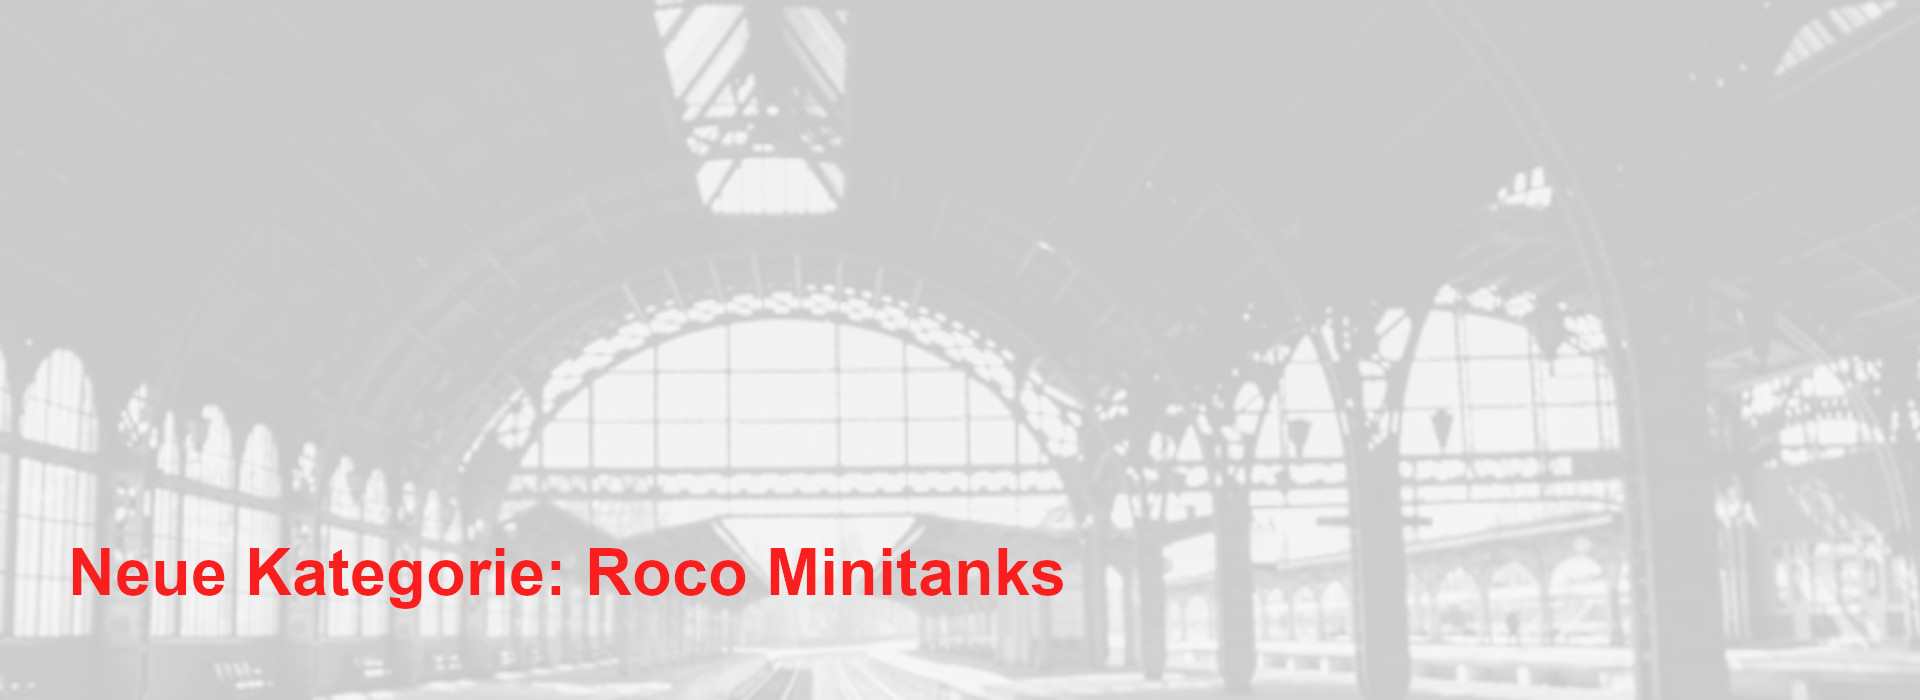 Slideshow Roco Minitanks